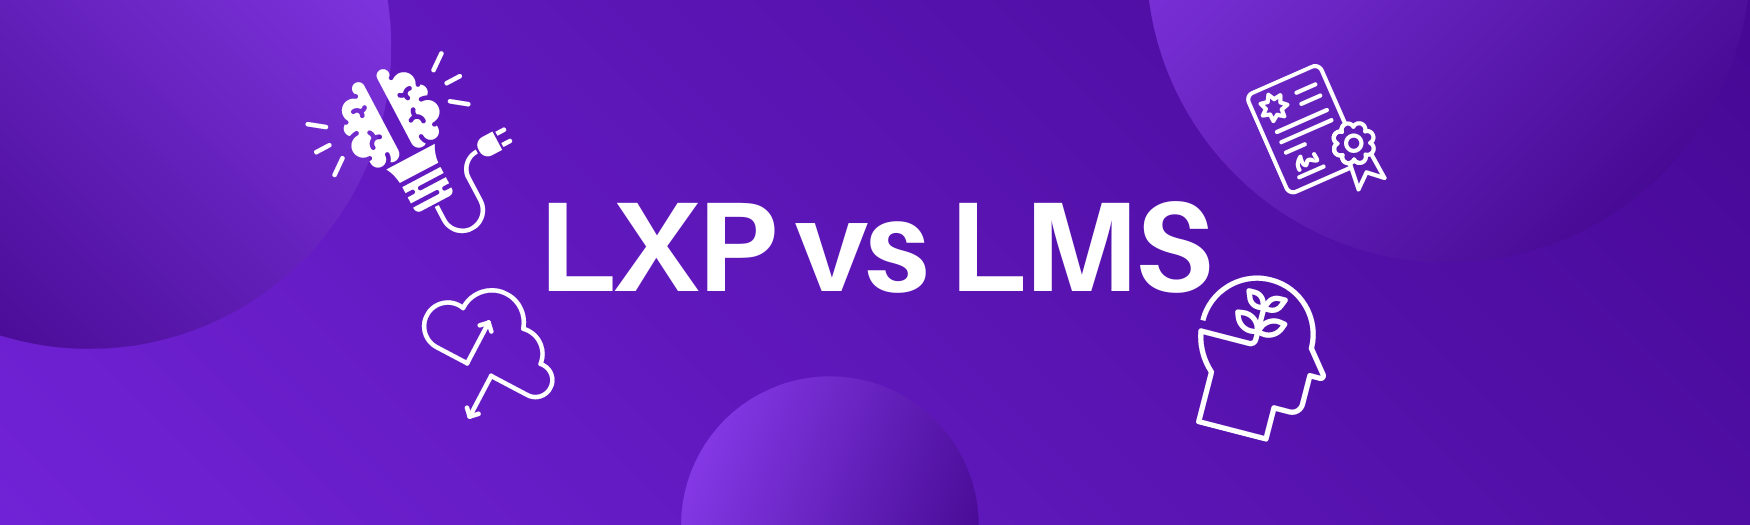 LXP vs LMS blog post header